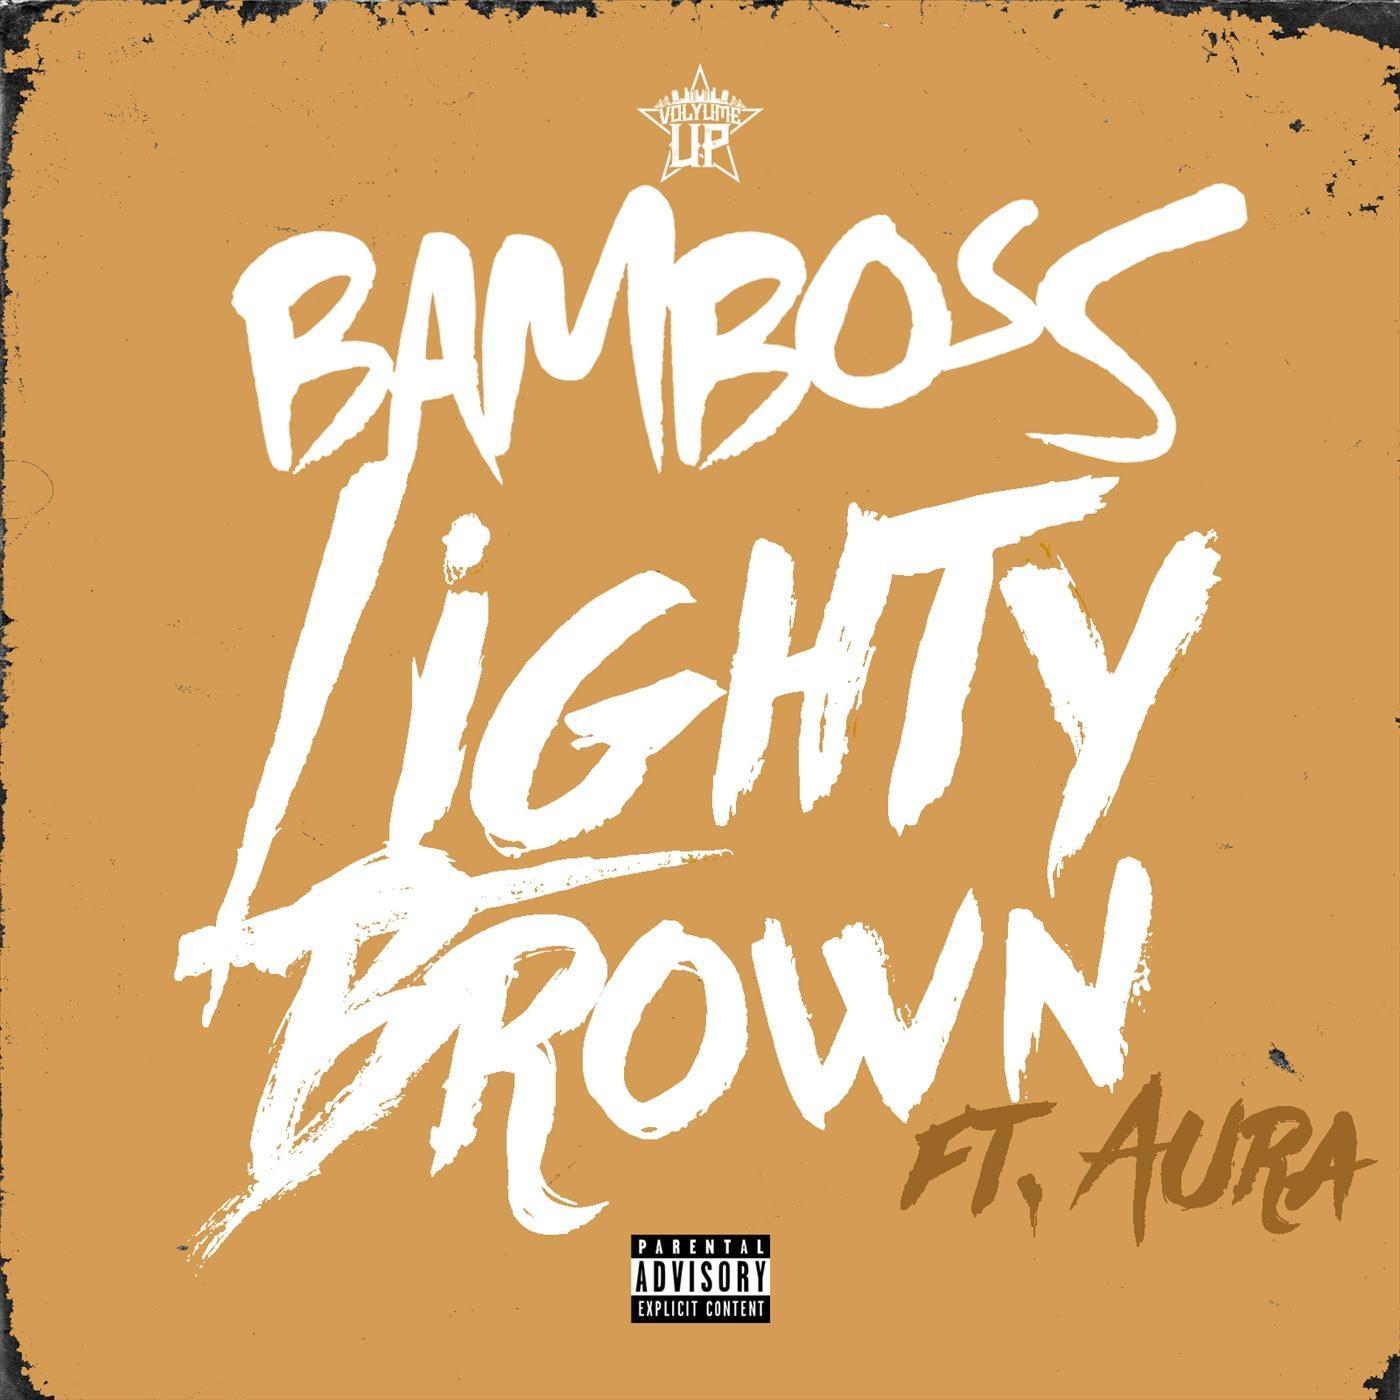 Bamboss - Lighty Brown